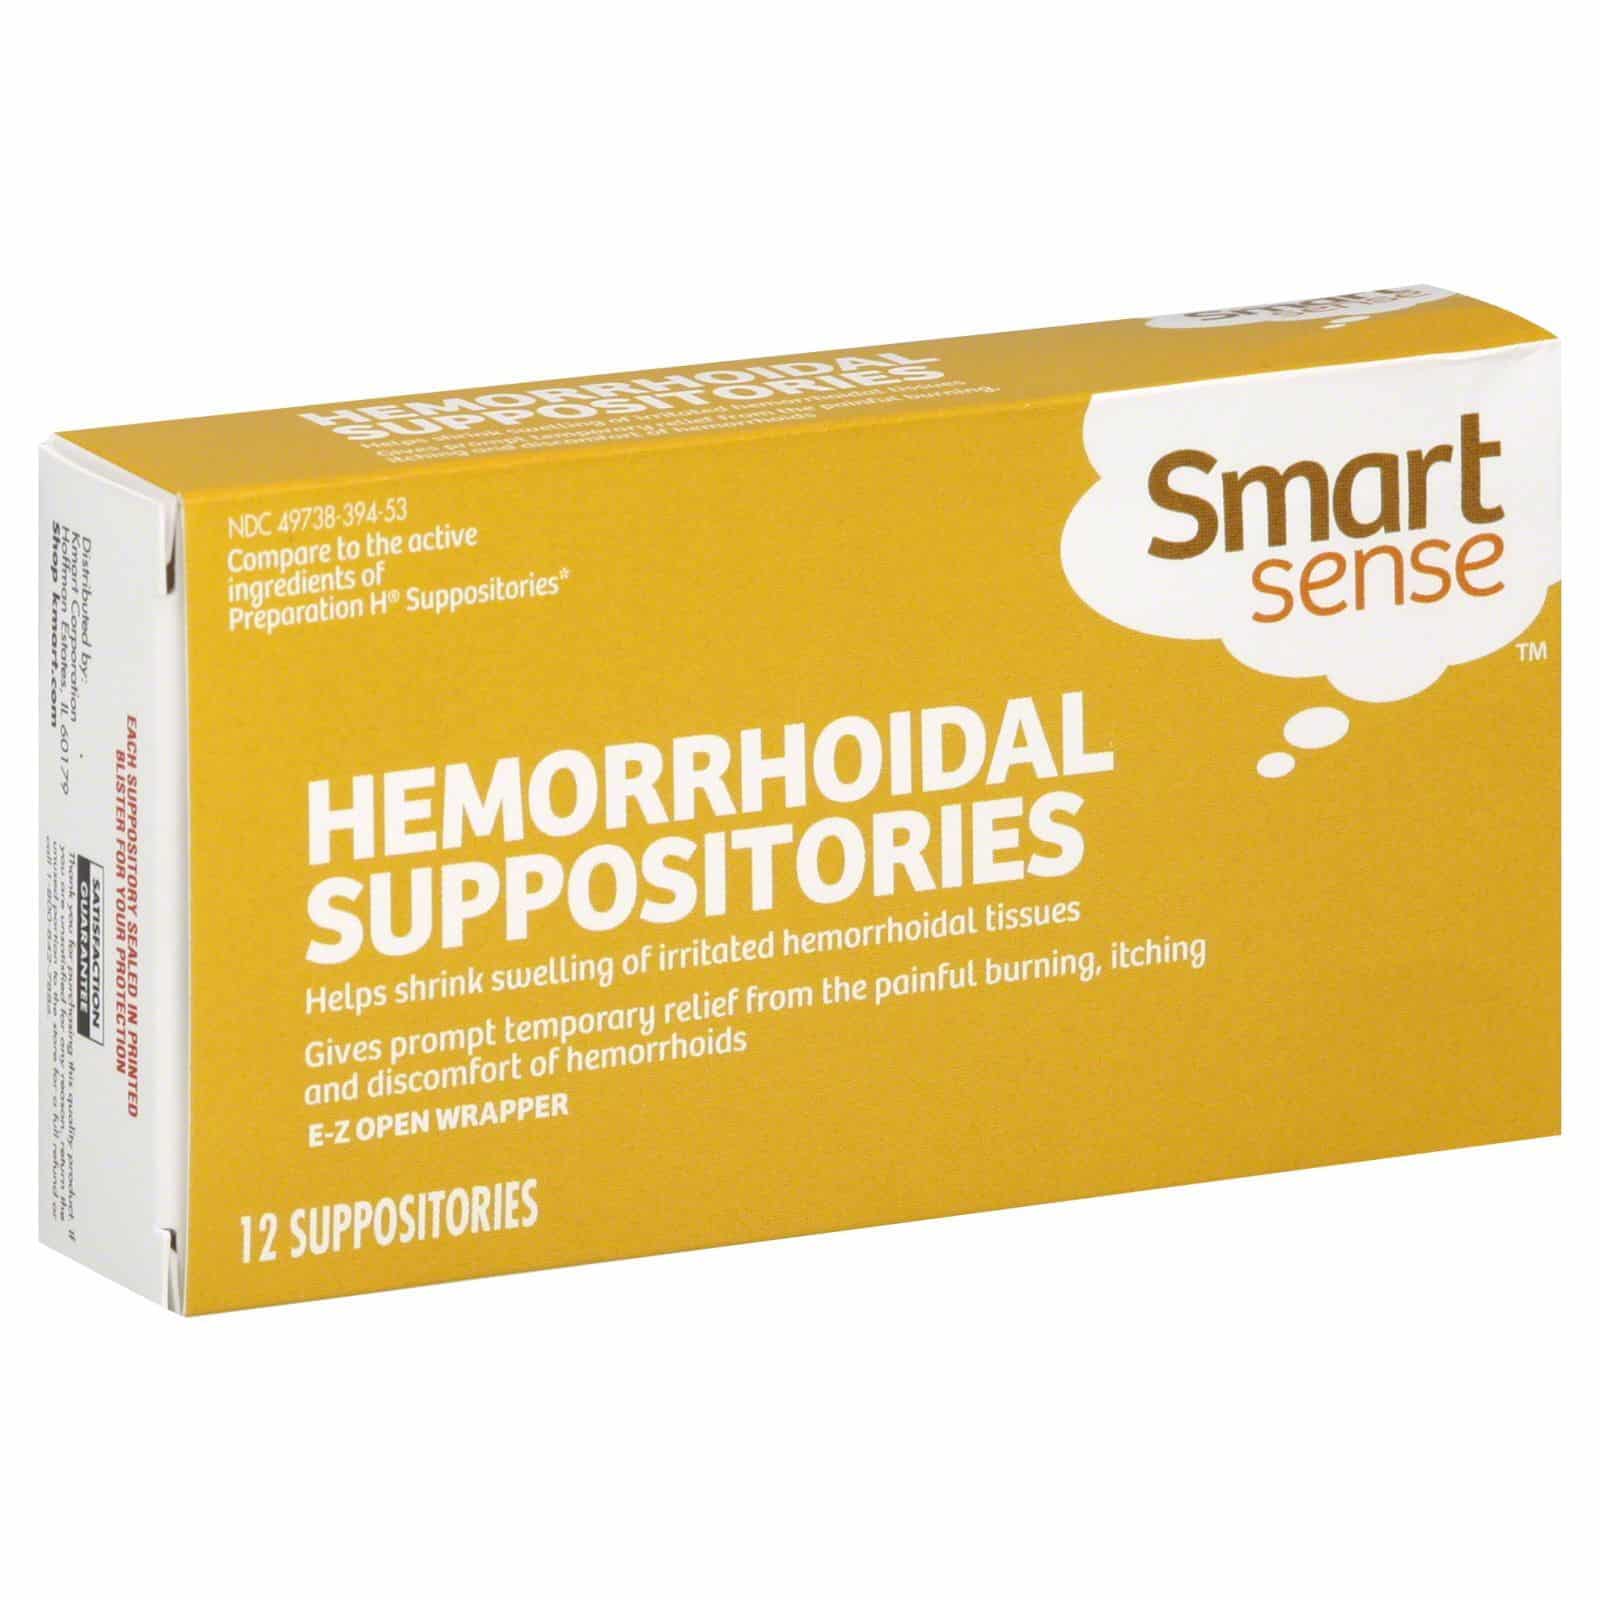 Smart Sense Hemorrhoidal Suppositories, 12 suppositories